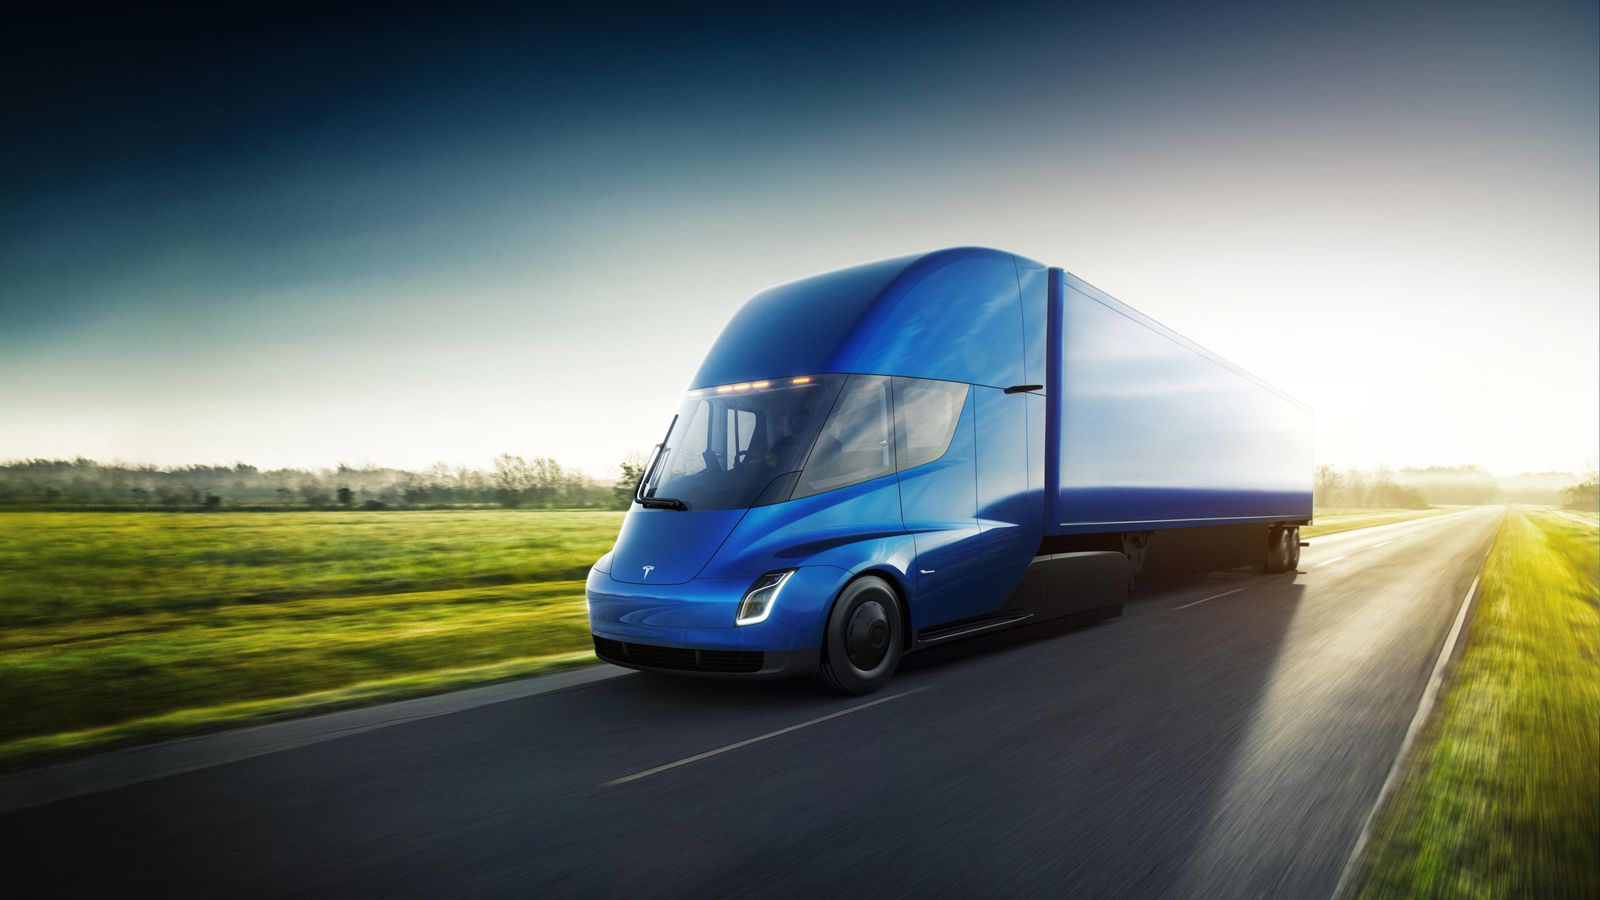 Tesla reveals its electric semi truck